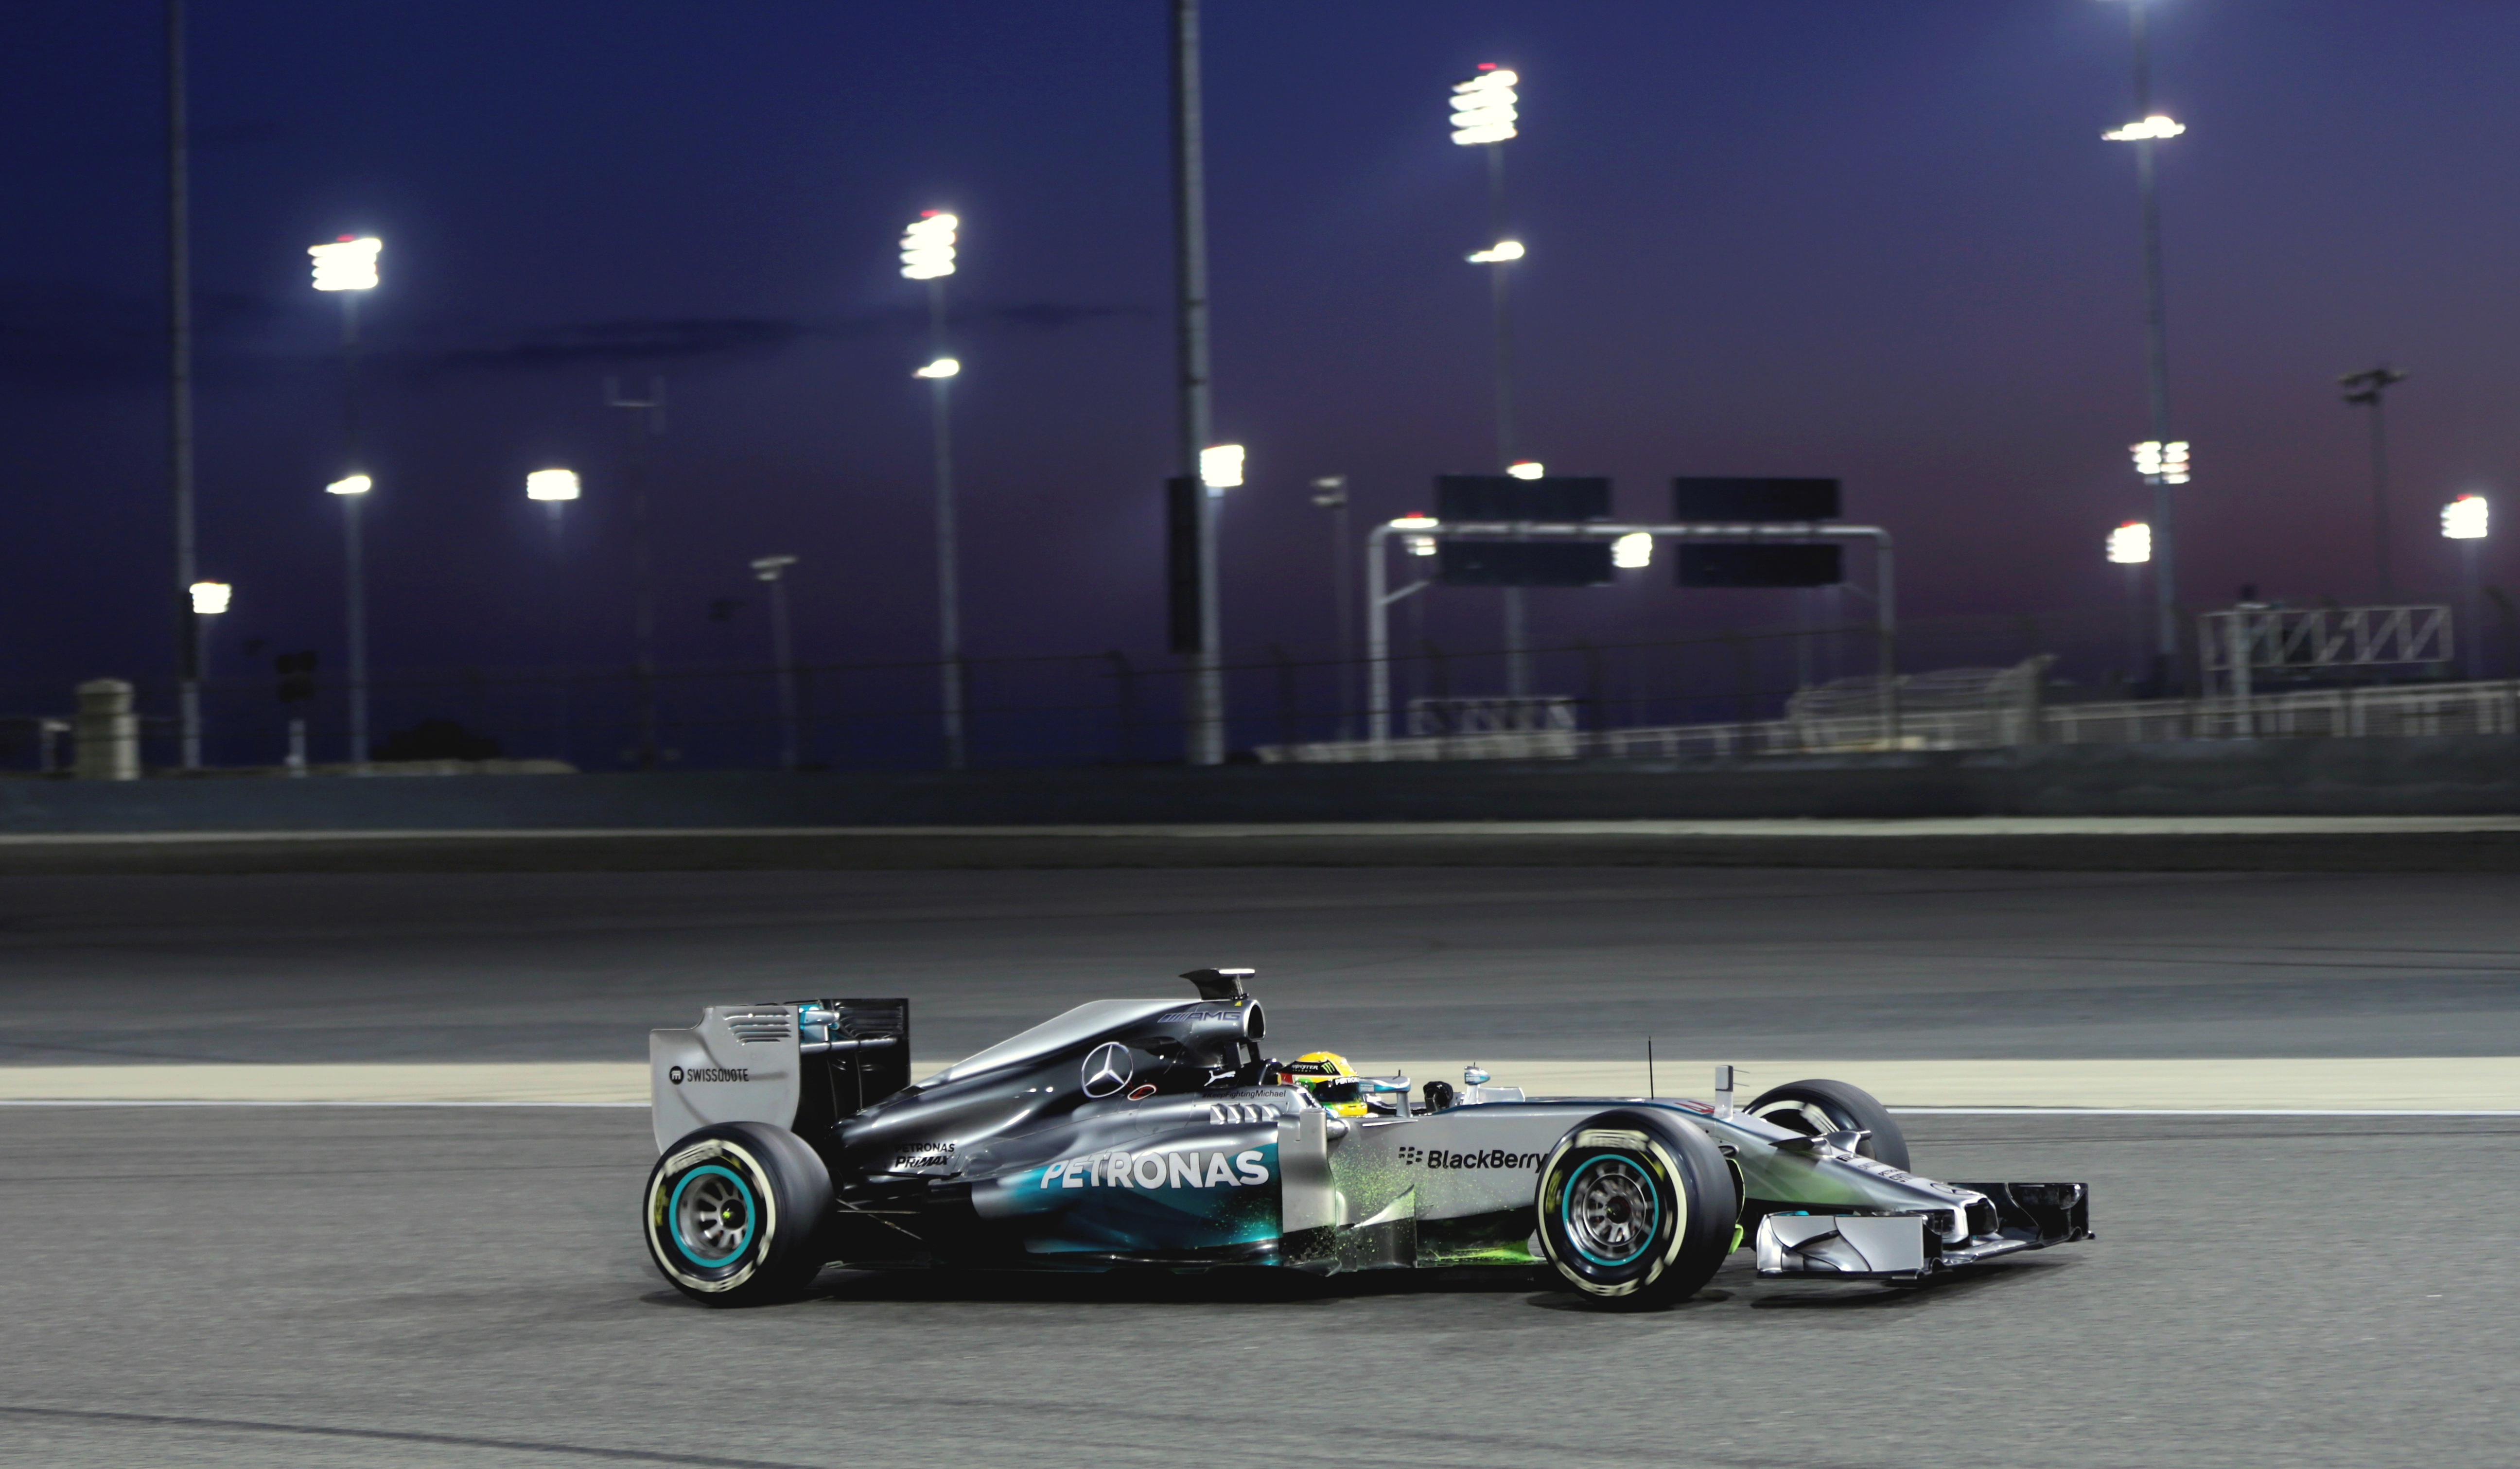 Wallpaper Lewis Hamilton Mercedes Amg W05 F1 Sports